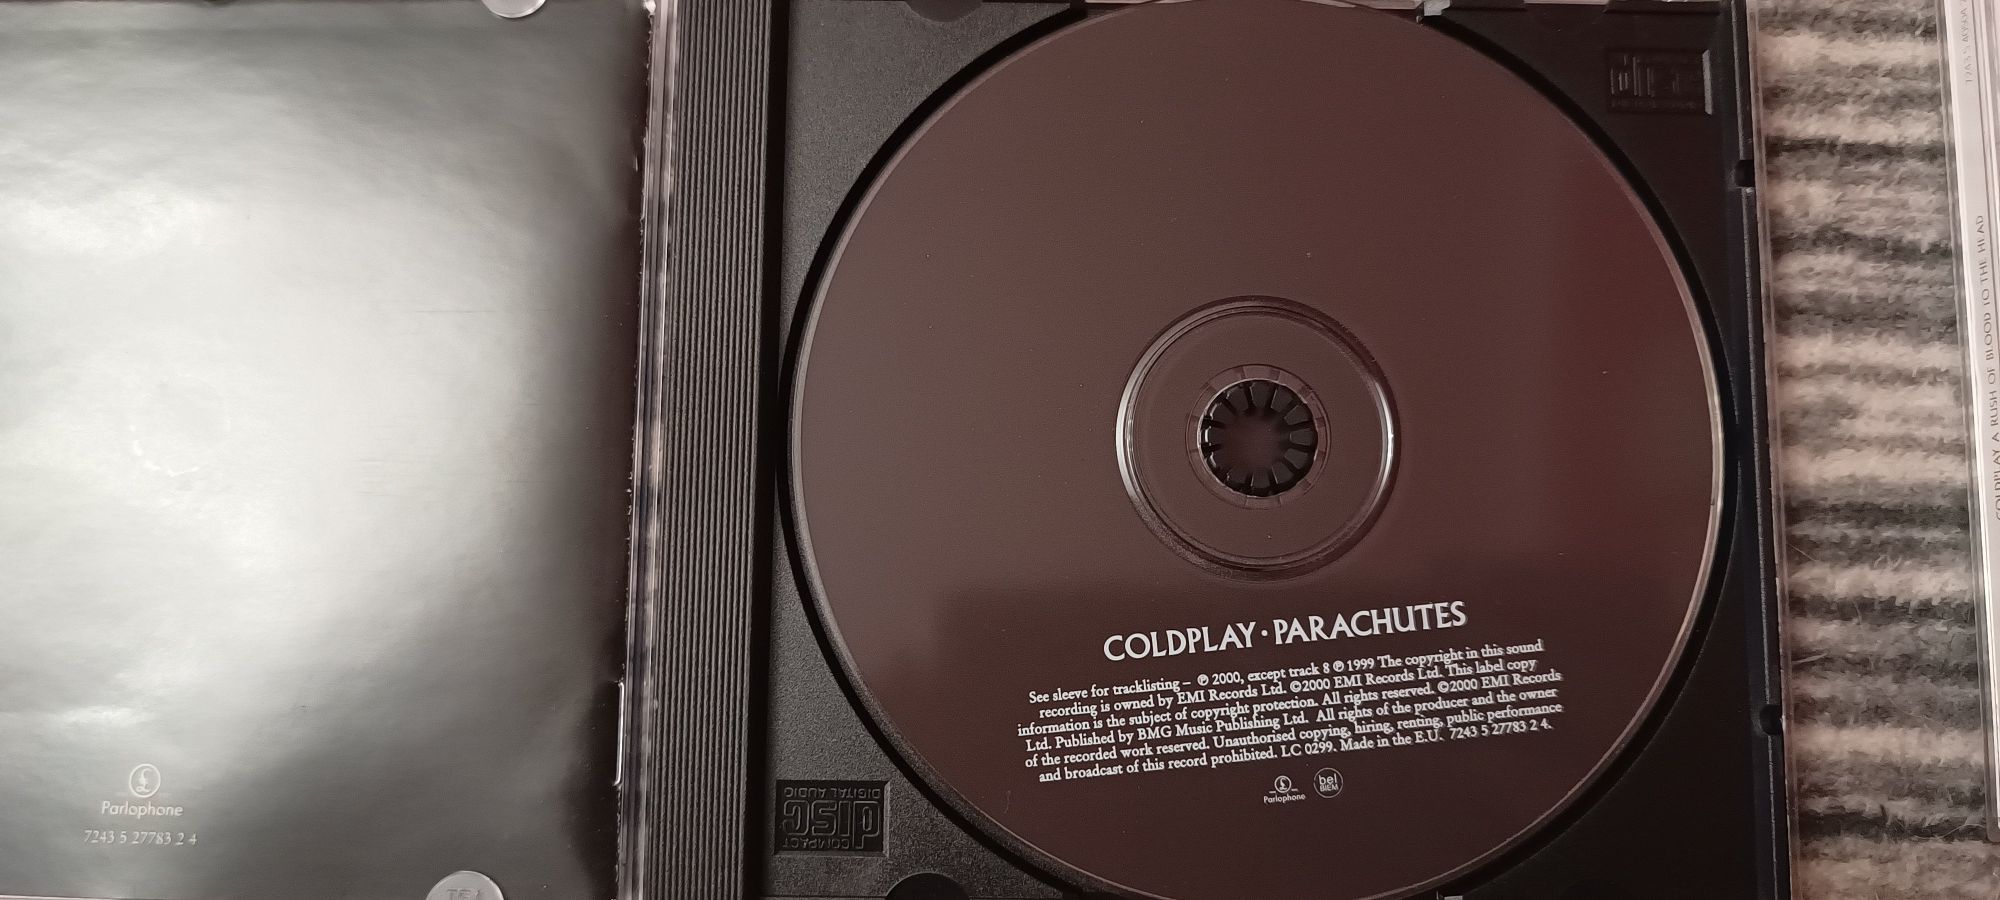 Płyty piosenki CD Coldplay parachutes a rush of blood